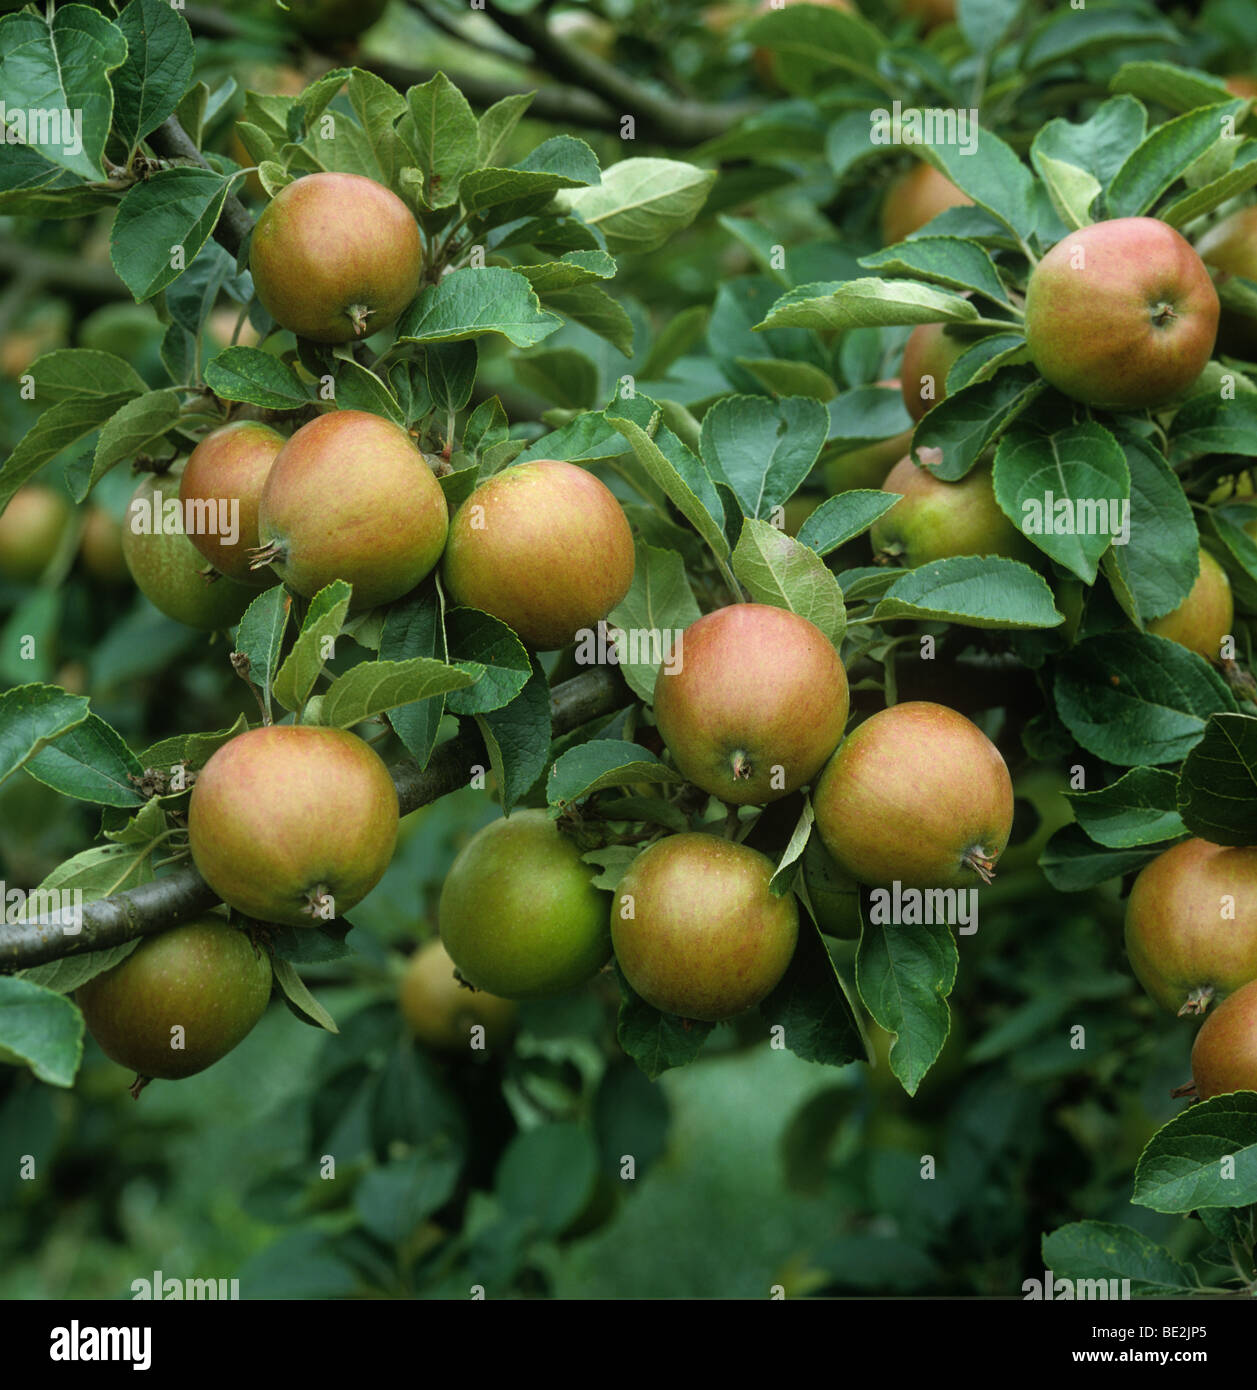 Mature coxs orange pippin apple fruit on the tree Stock Photo